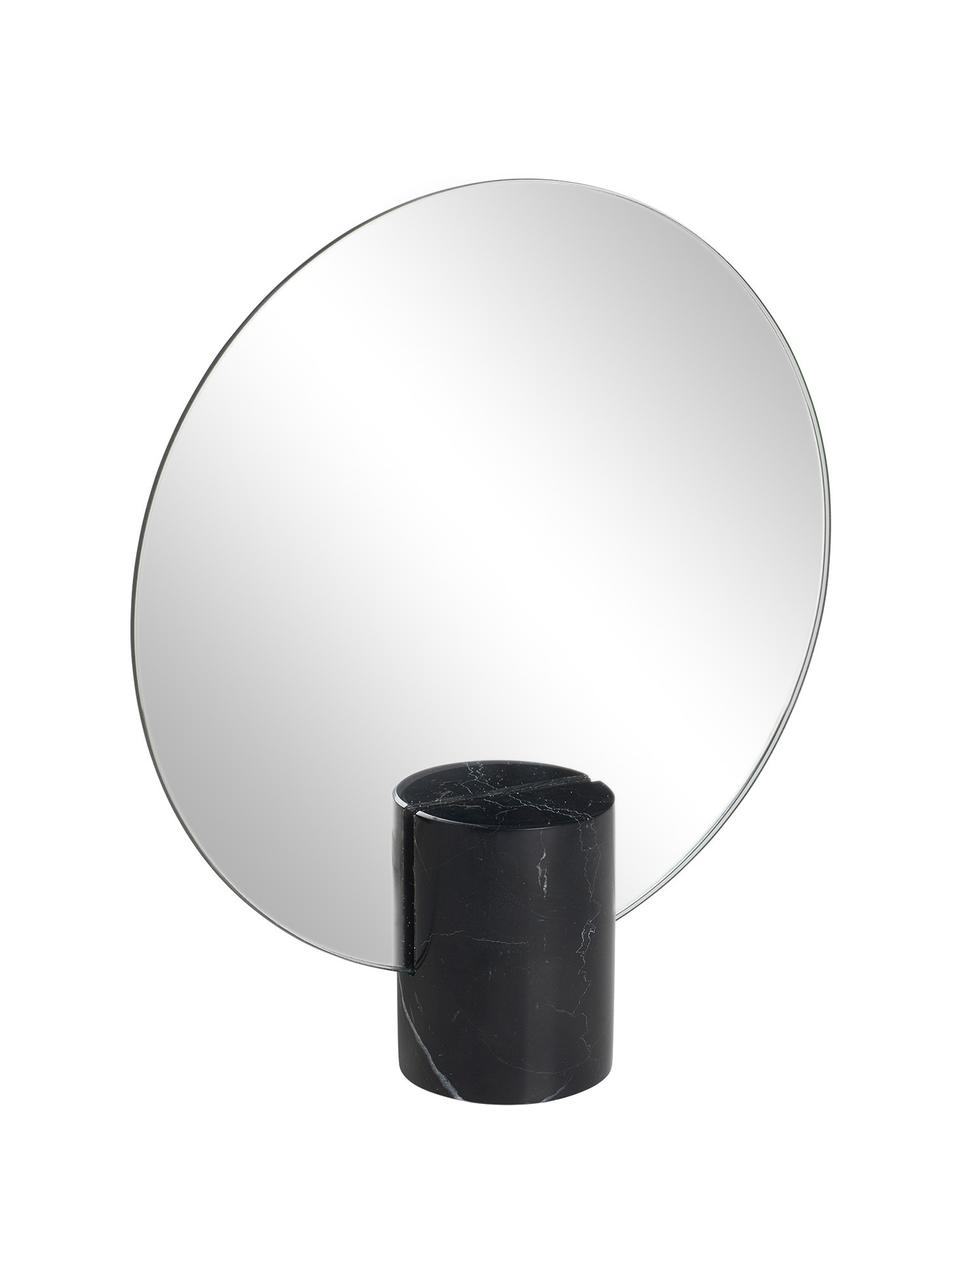 Miroir de salle de bain Pesa, Noir, larg. 22 x haut. 25 cm